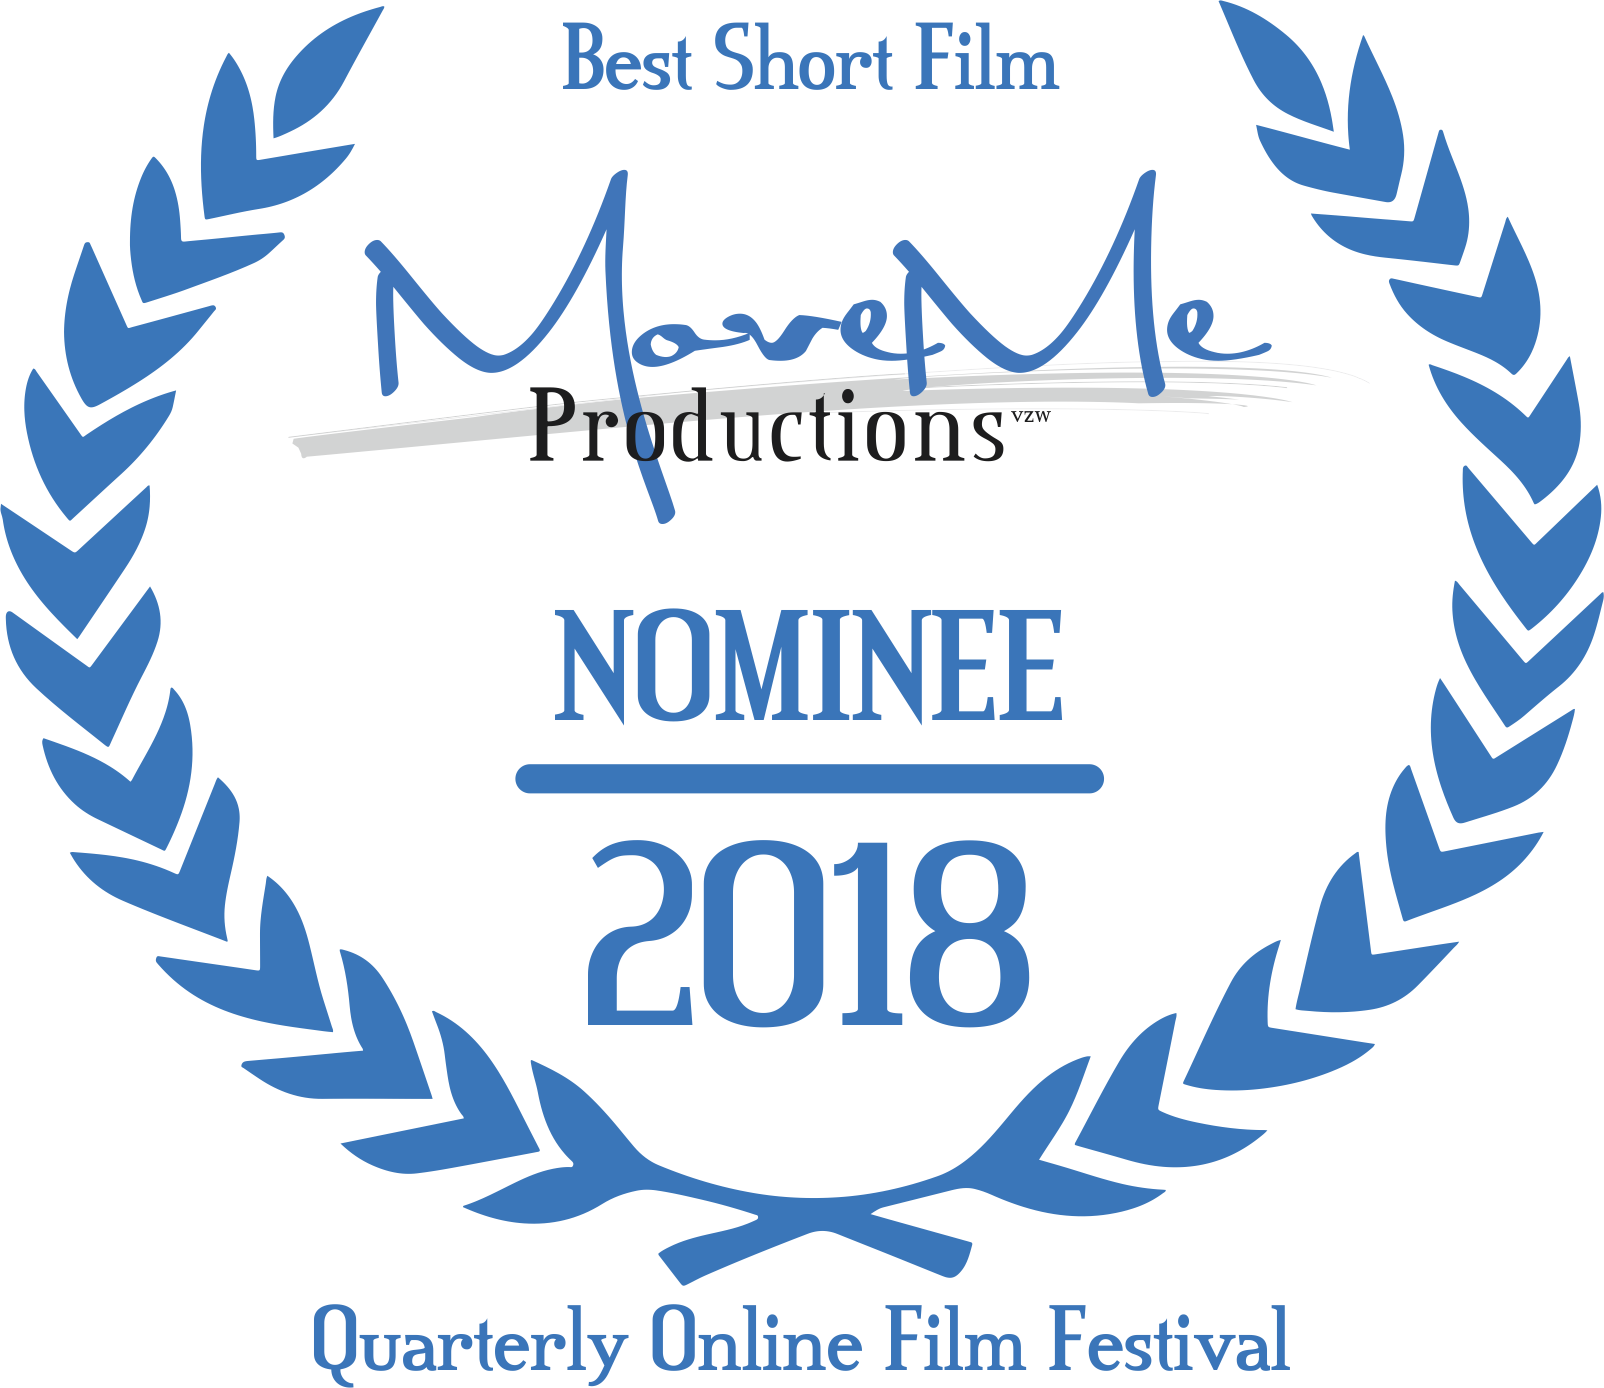 Best Short Film Nominee Movie Me Productions Quarterly Online Film Festival 2018